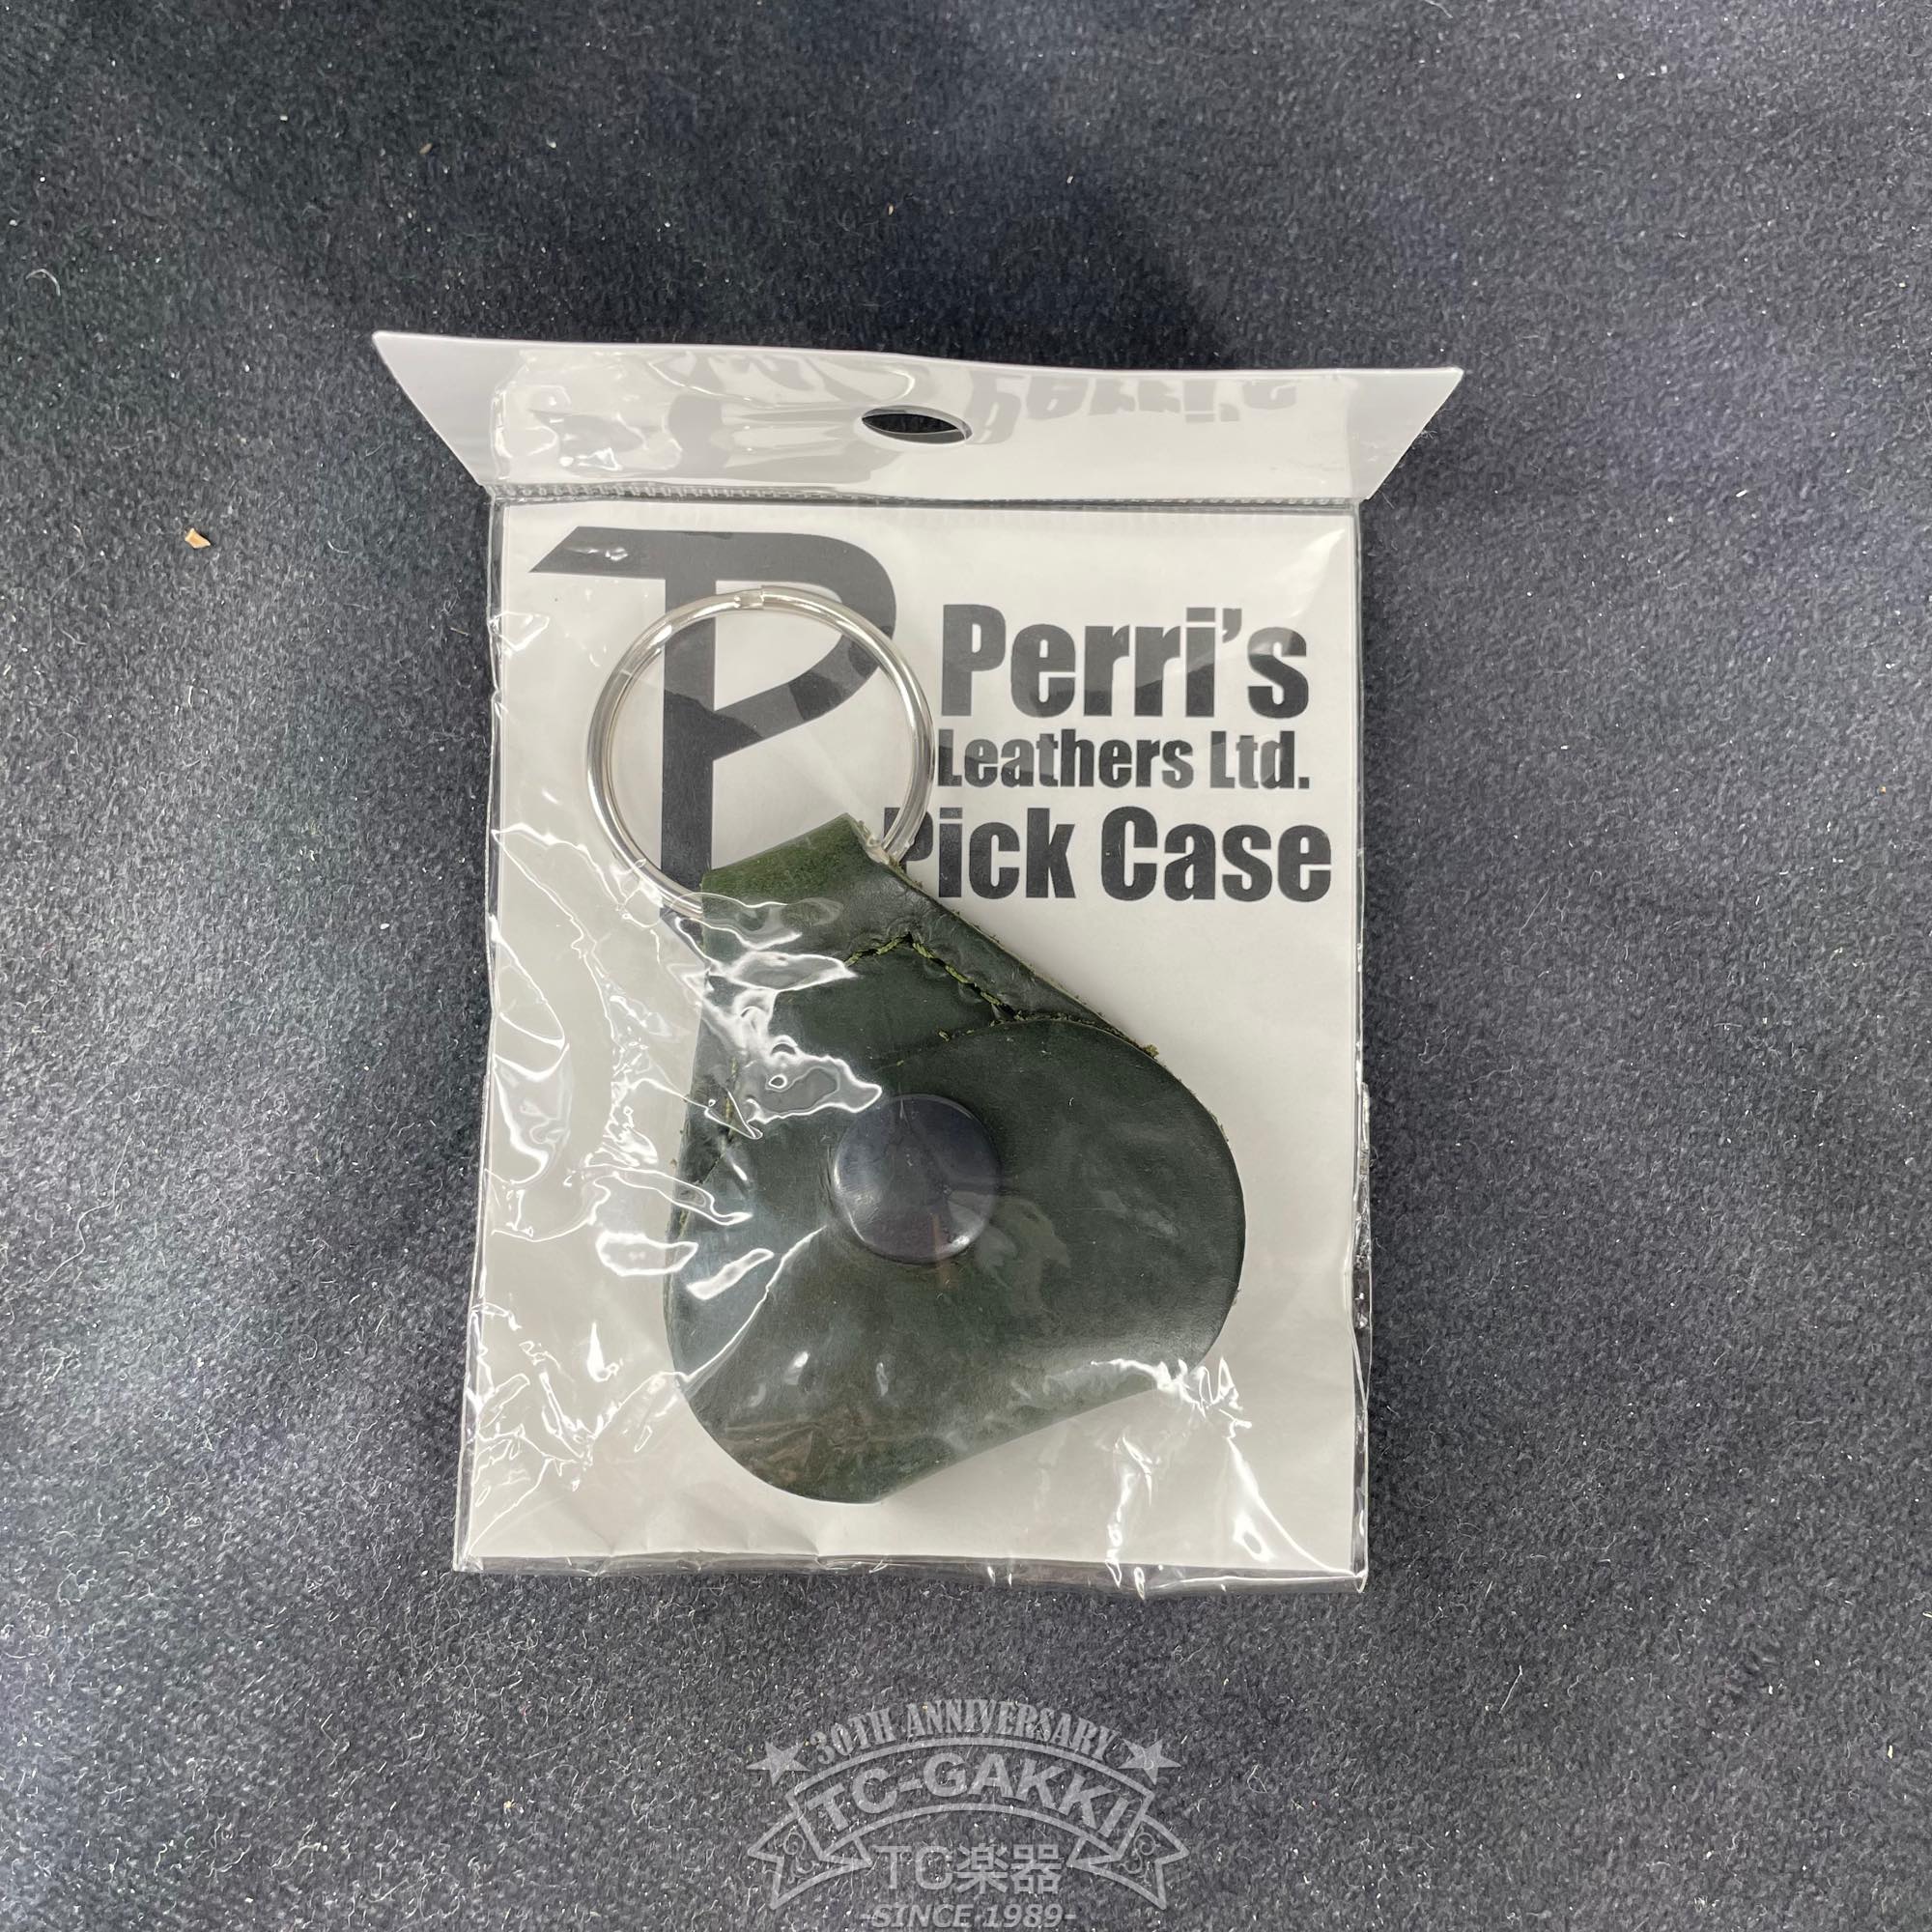 Perri's Pick Case - TC楽器 - TCGAKKI